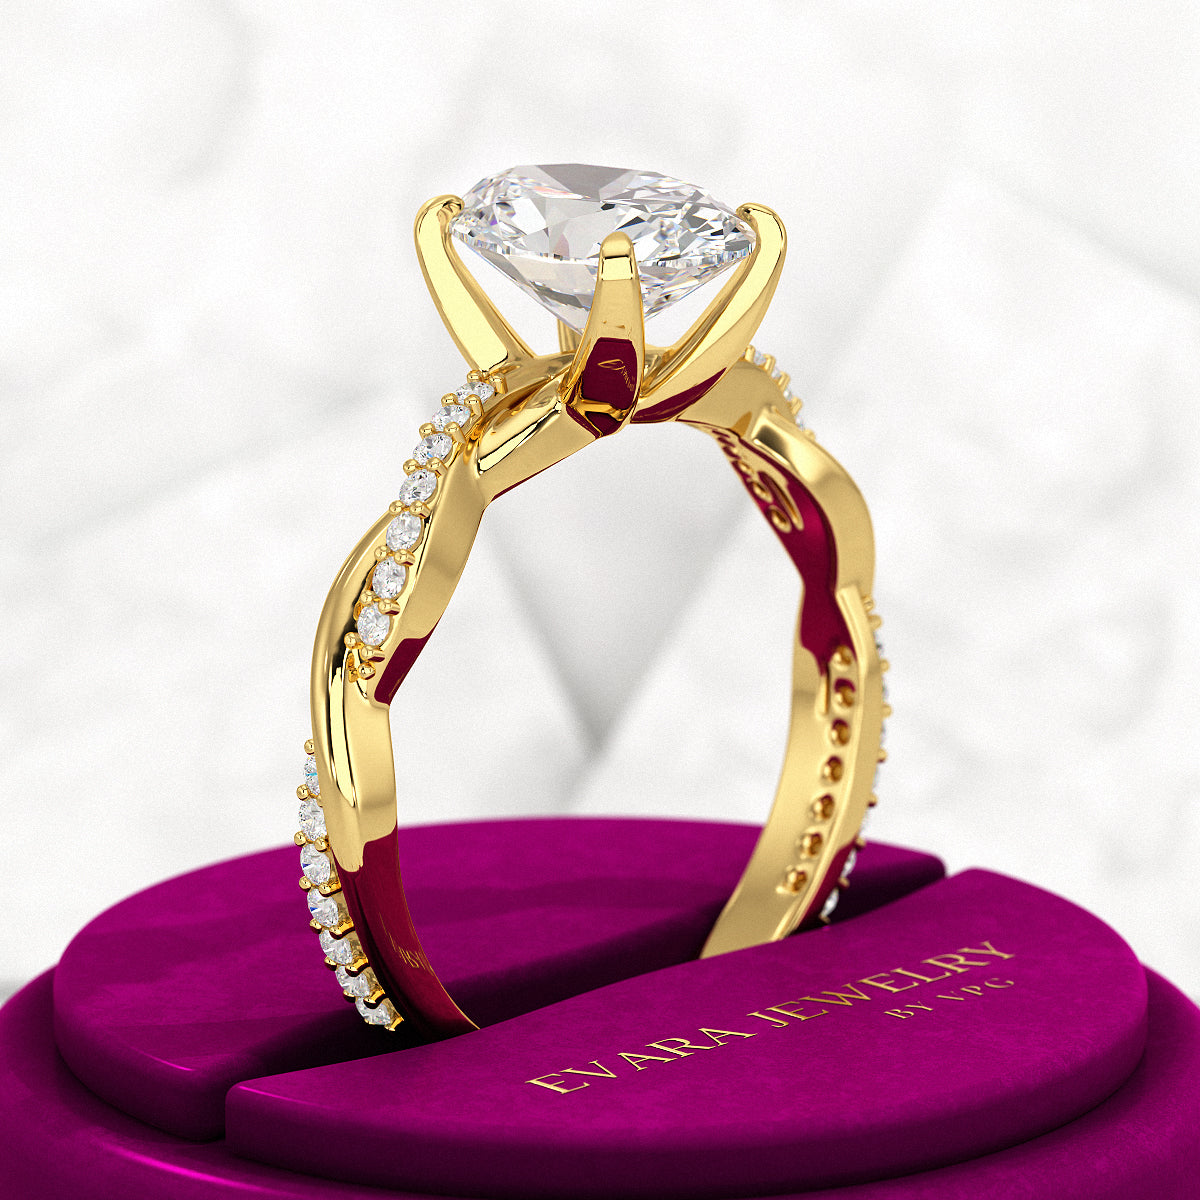 2 Carat Oval Diamond Nature Inspired Minimalist Engagement Ring